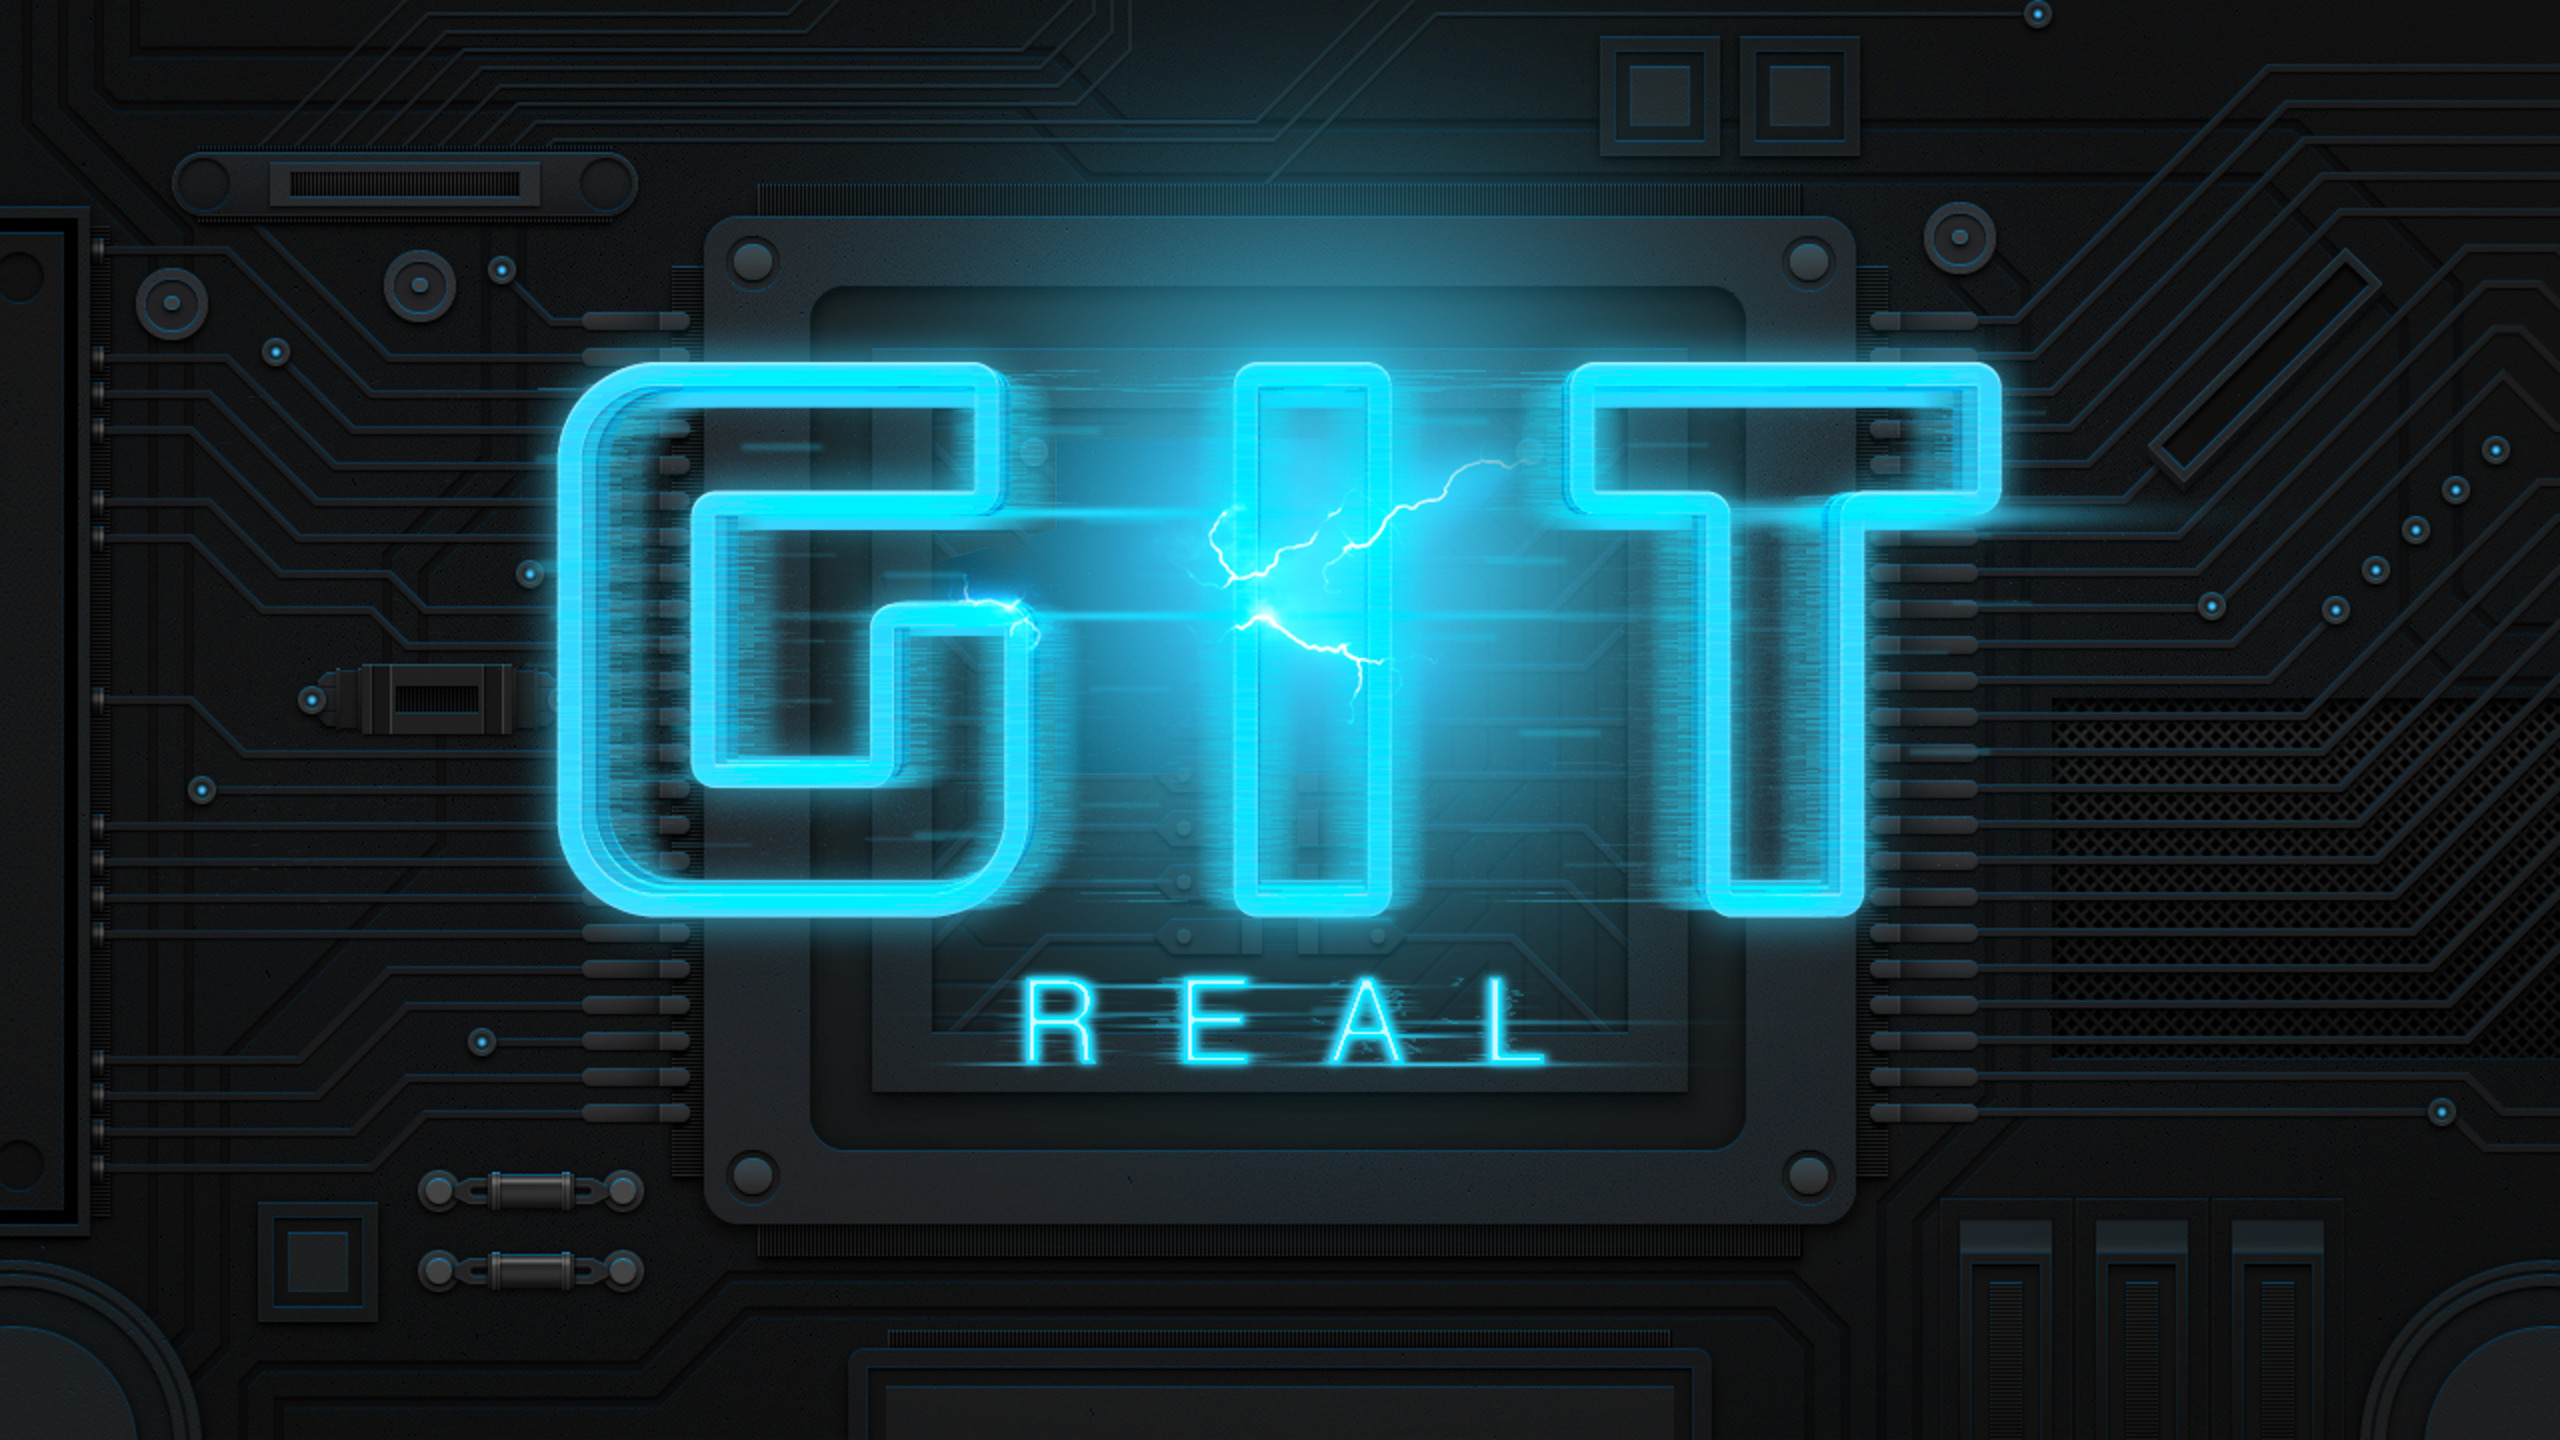 1. Git Real